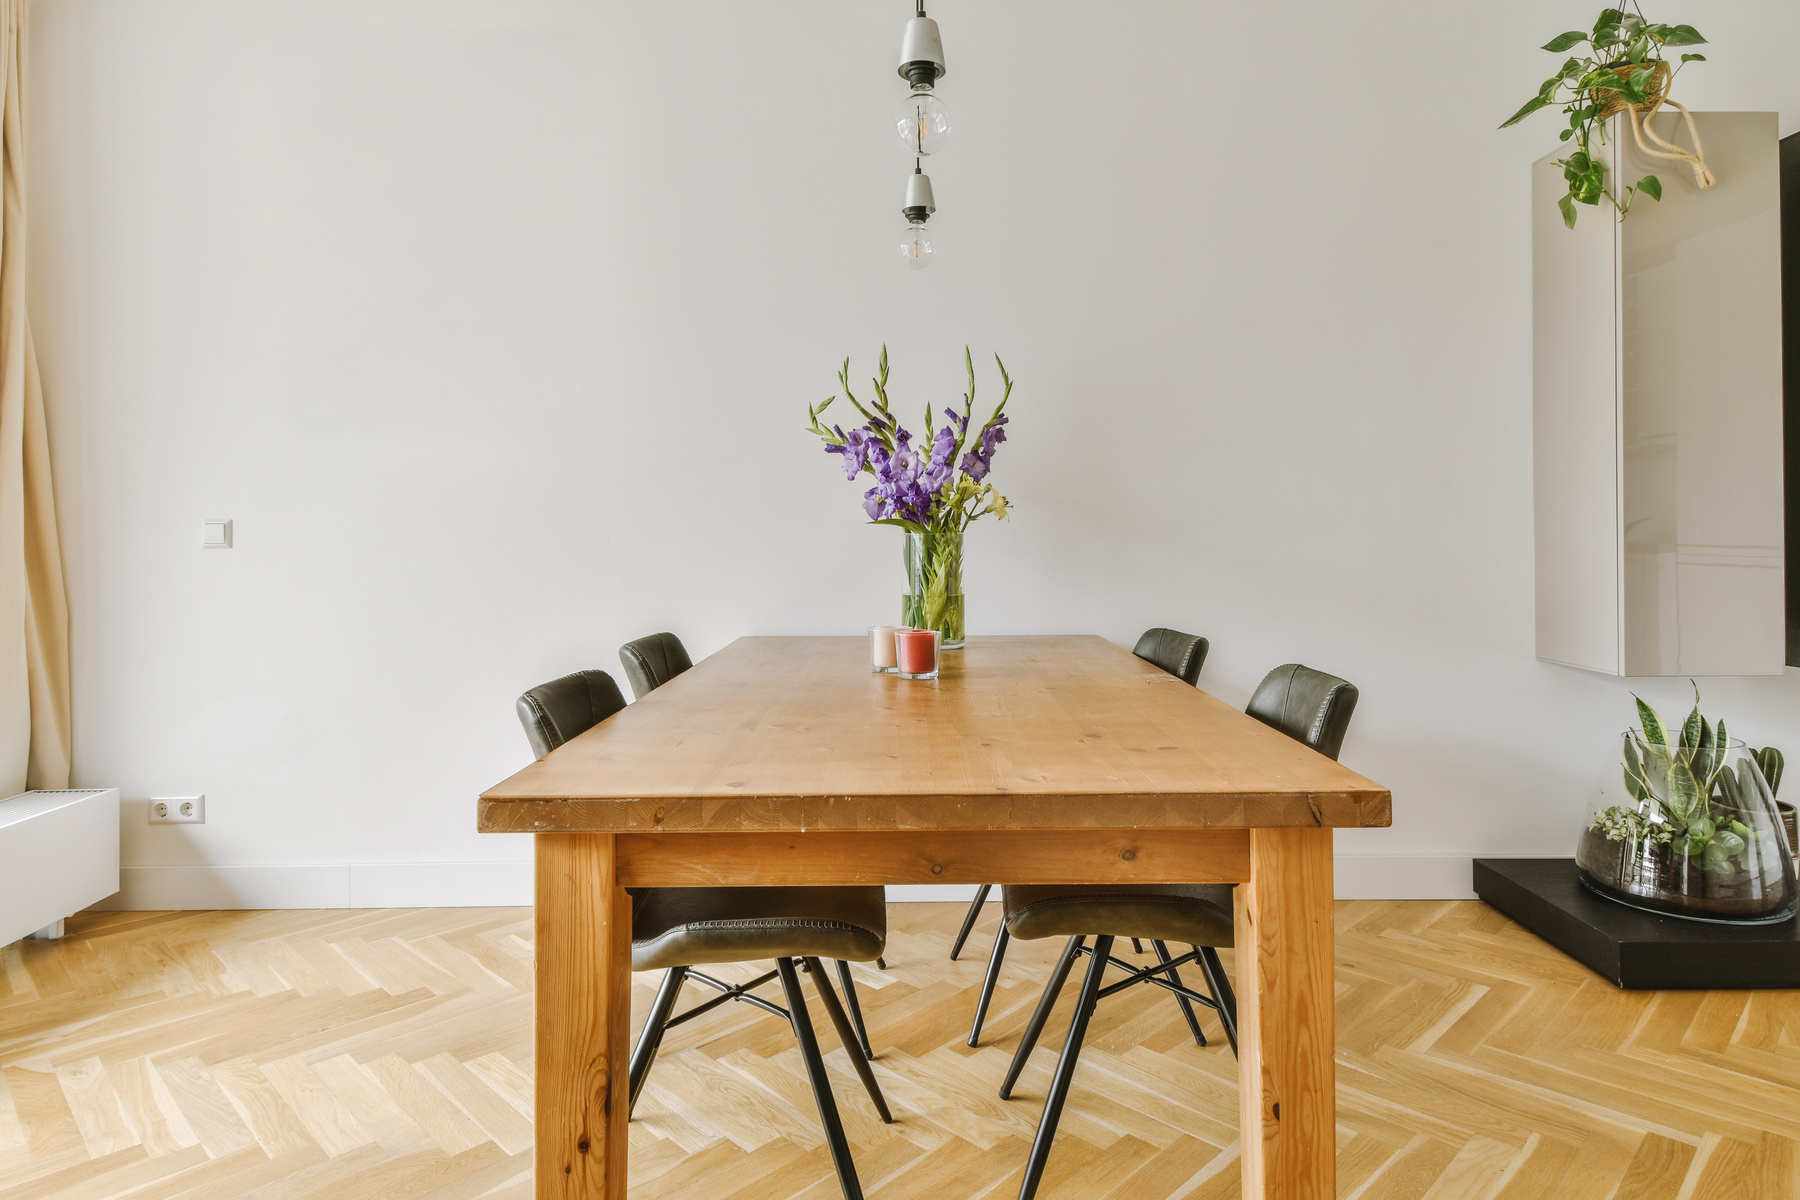 Studio Apartment Interior with Wooden Furniture